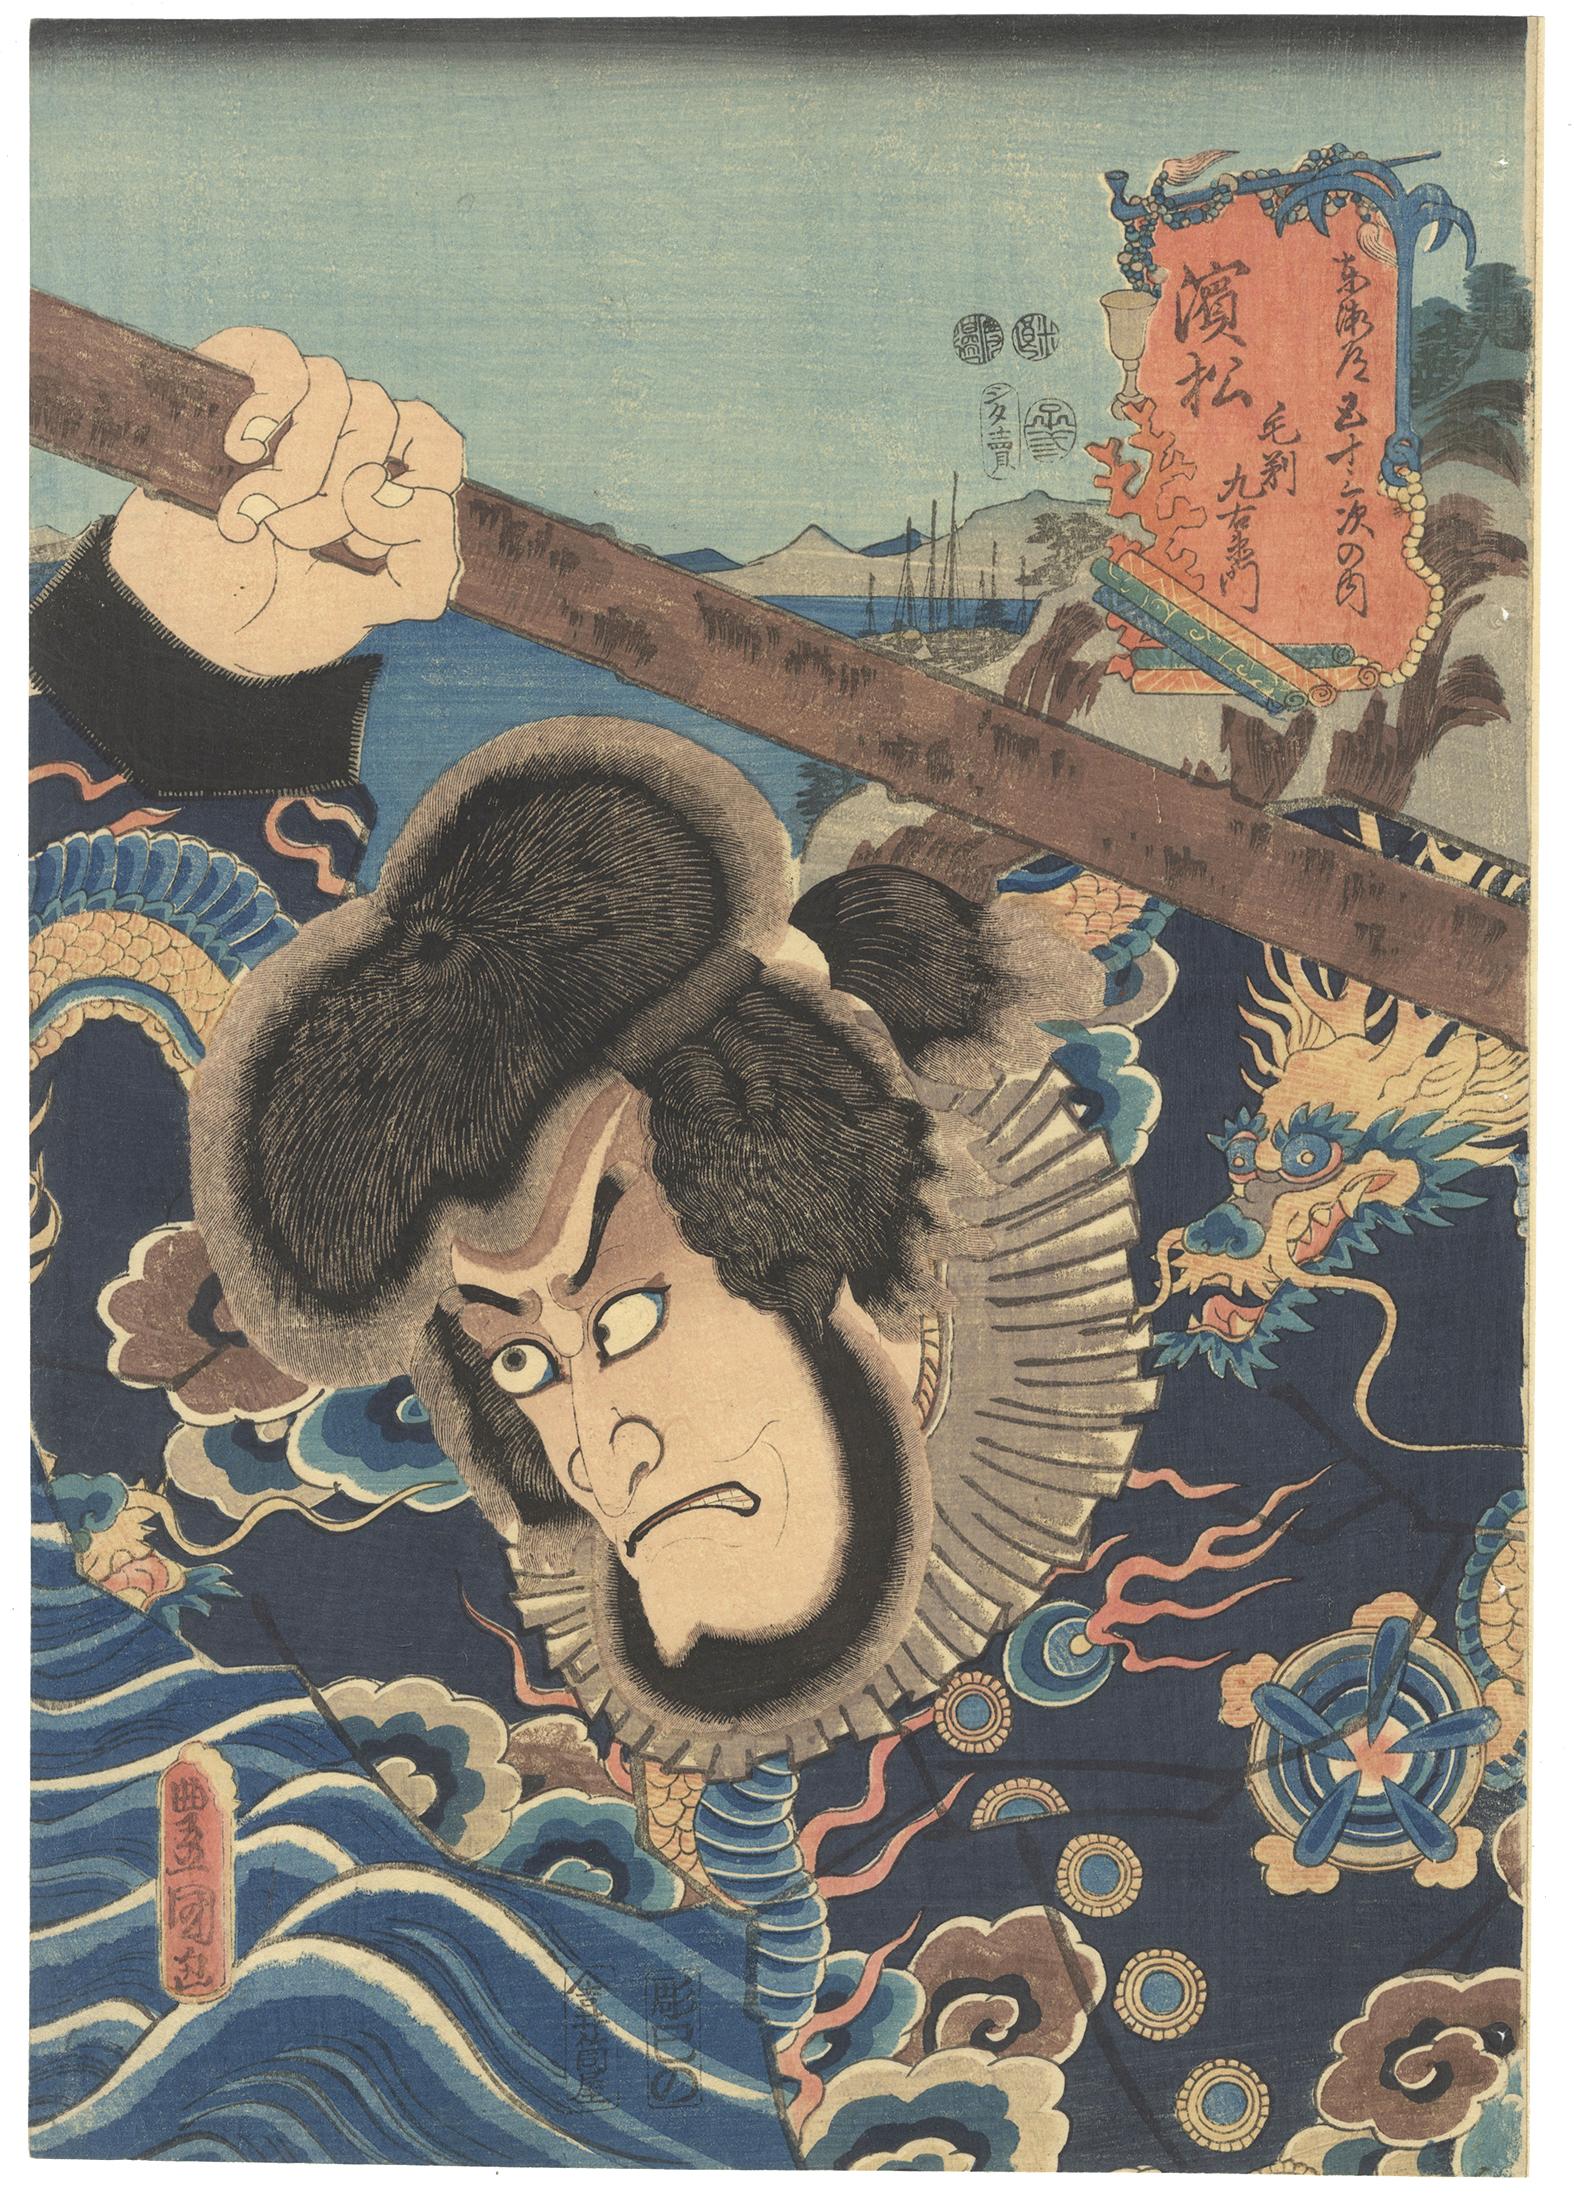 Utagawa Kunisada (Toyokuni III) Landscape Print - Original Japanese Woodblock Print, Utagawa Kunisada, 19th Century, Ukiyo-e Actor